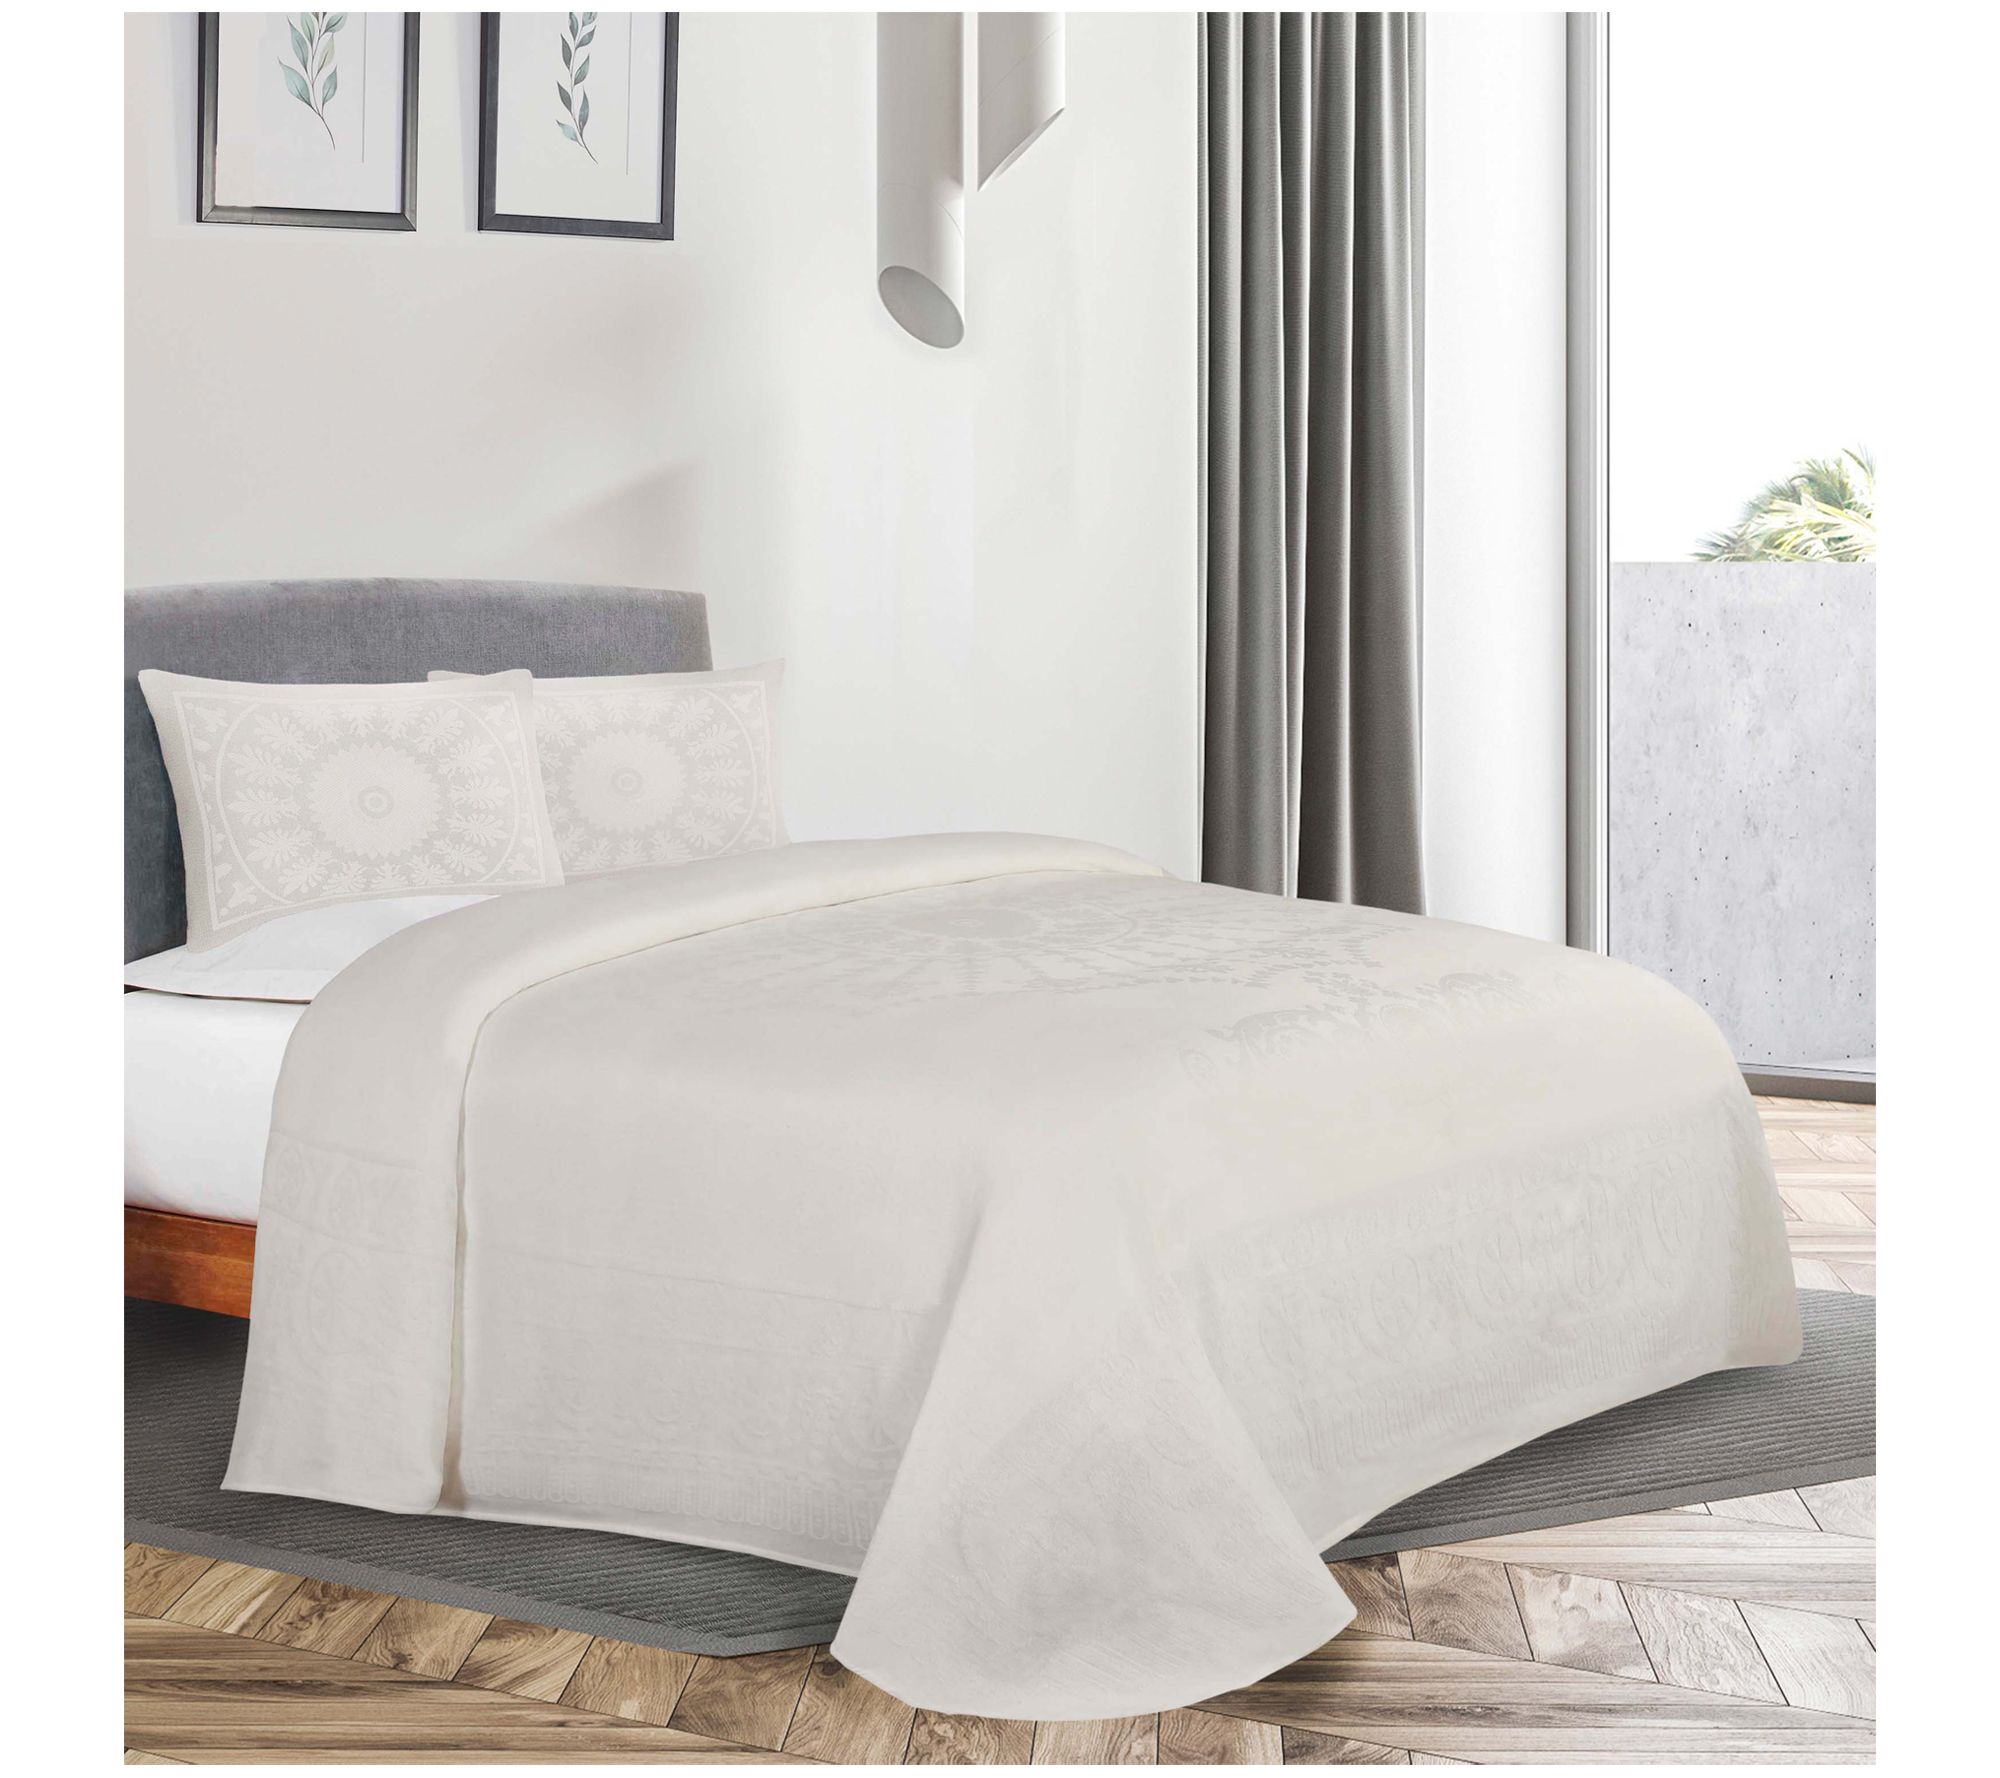 Superior 3-Piece Kymbal Cotton Blend Off-White Bedspread Set, Queen